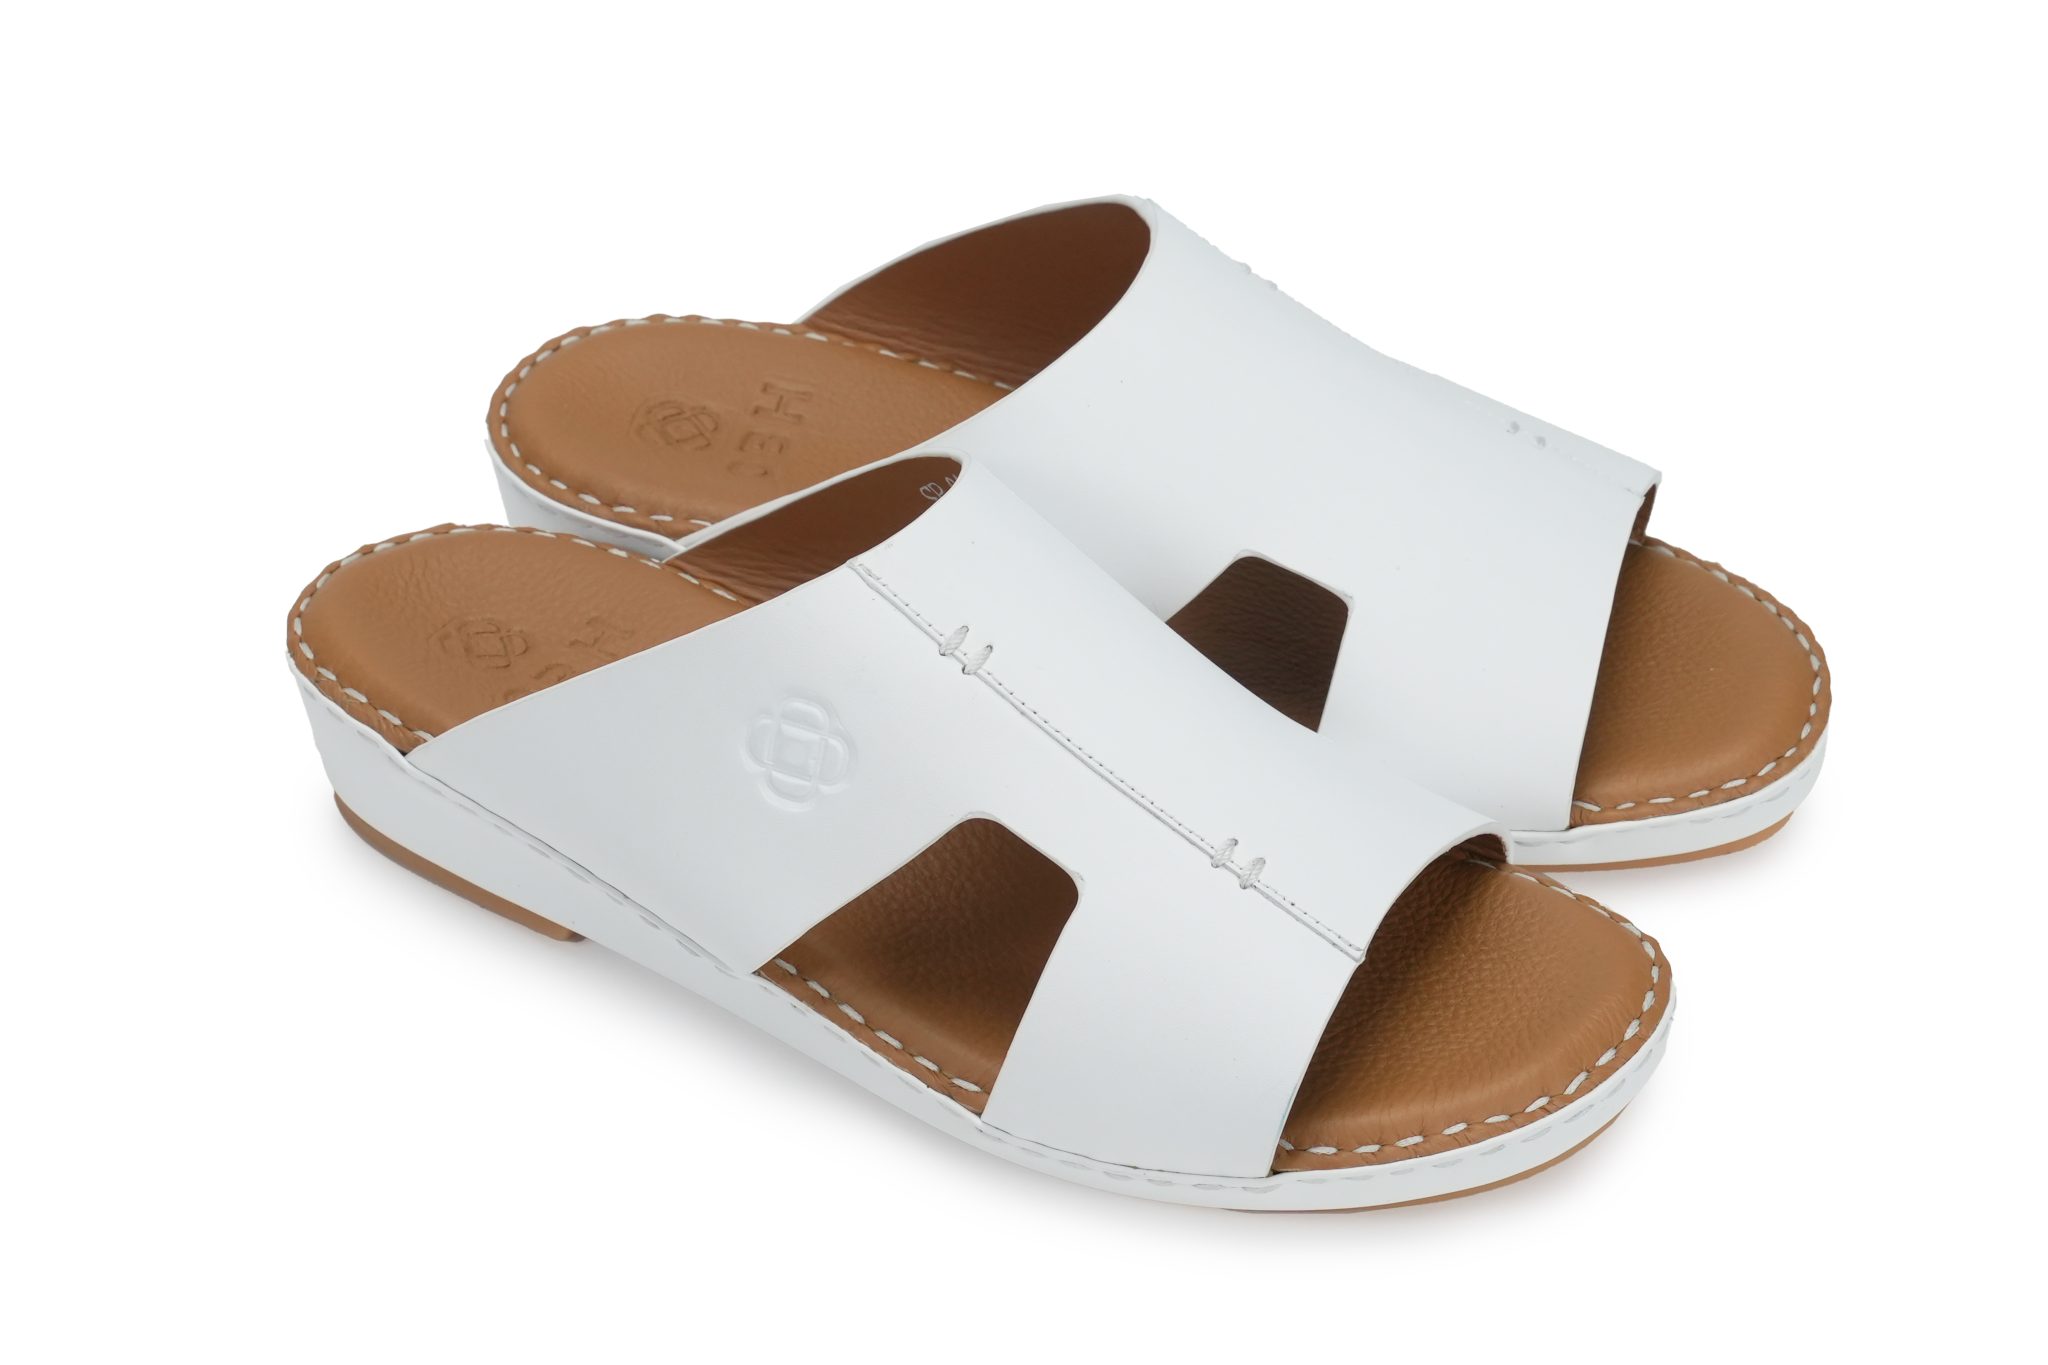 Buy OBH Sandals Kids SP Model 1 White Color Online in UAE | OBH Collection